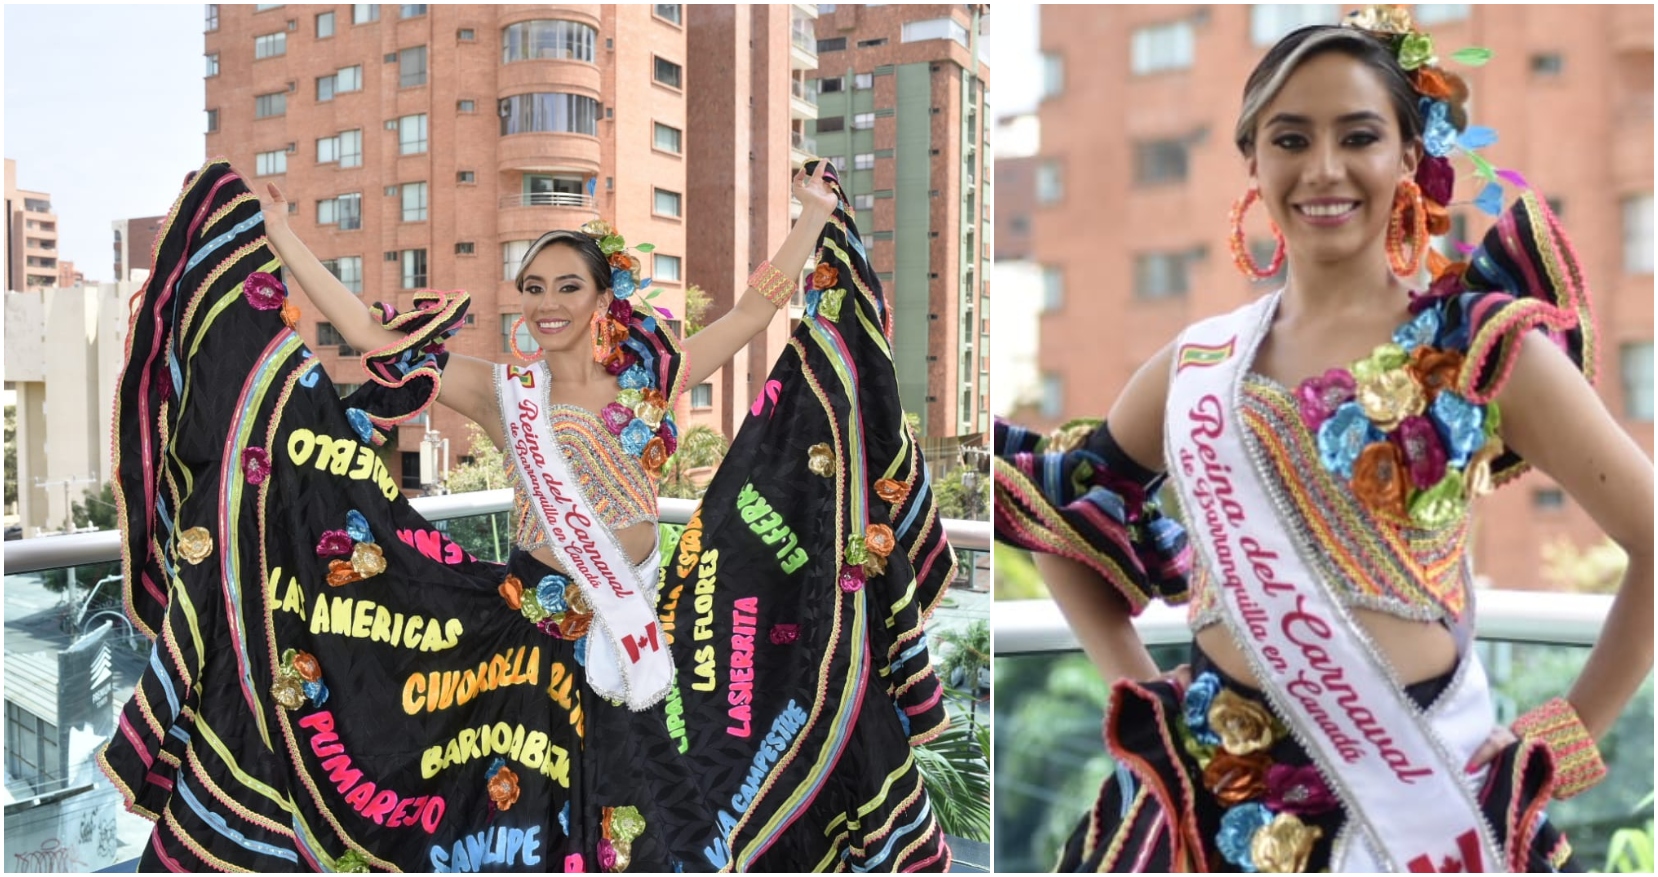 Paula Bernal Quintero, reina del Carnaval de Barranquilla en Canadá.